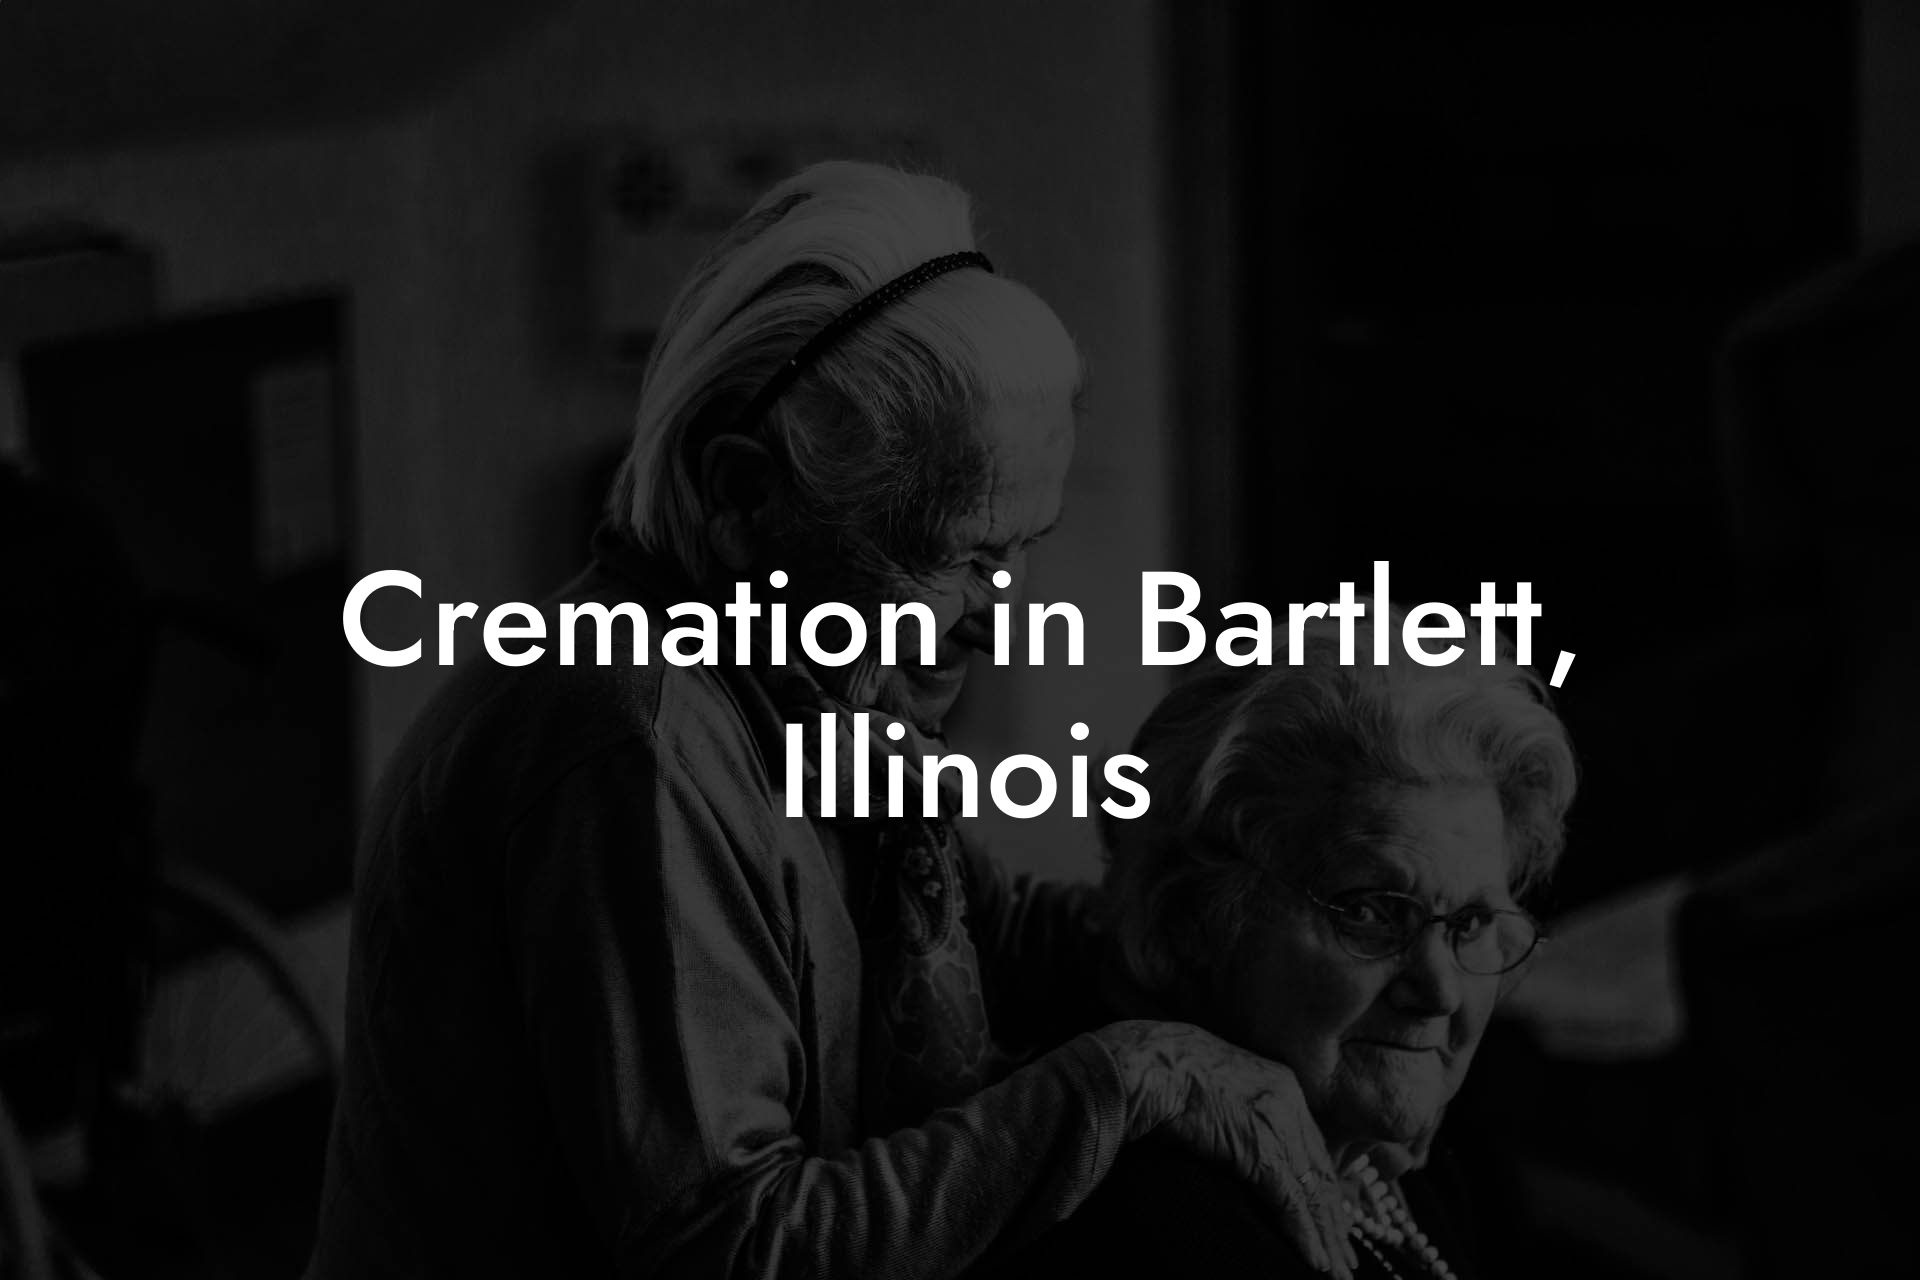 Cremation in Bartlett, Illinois